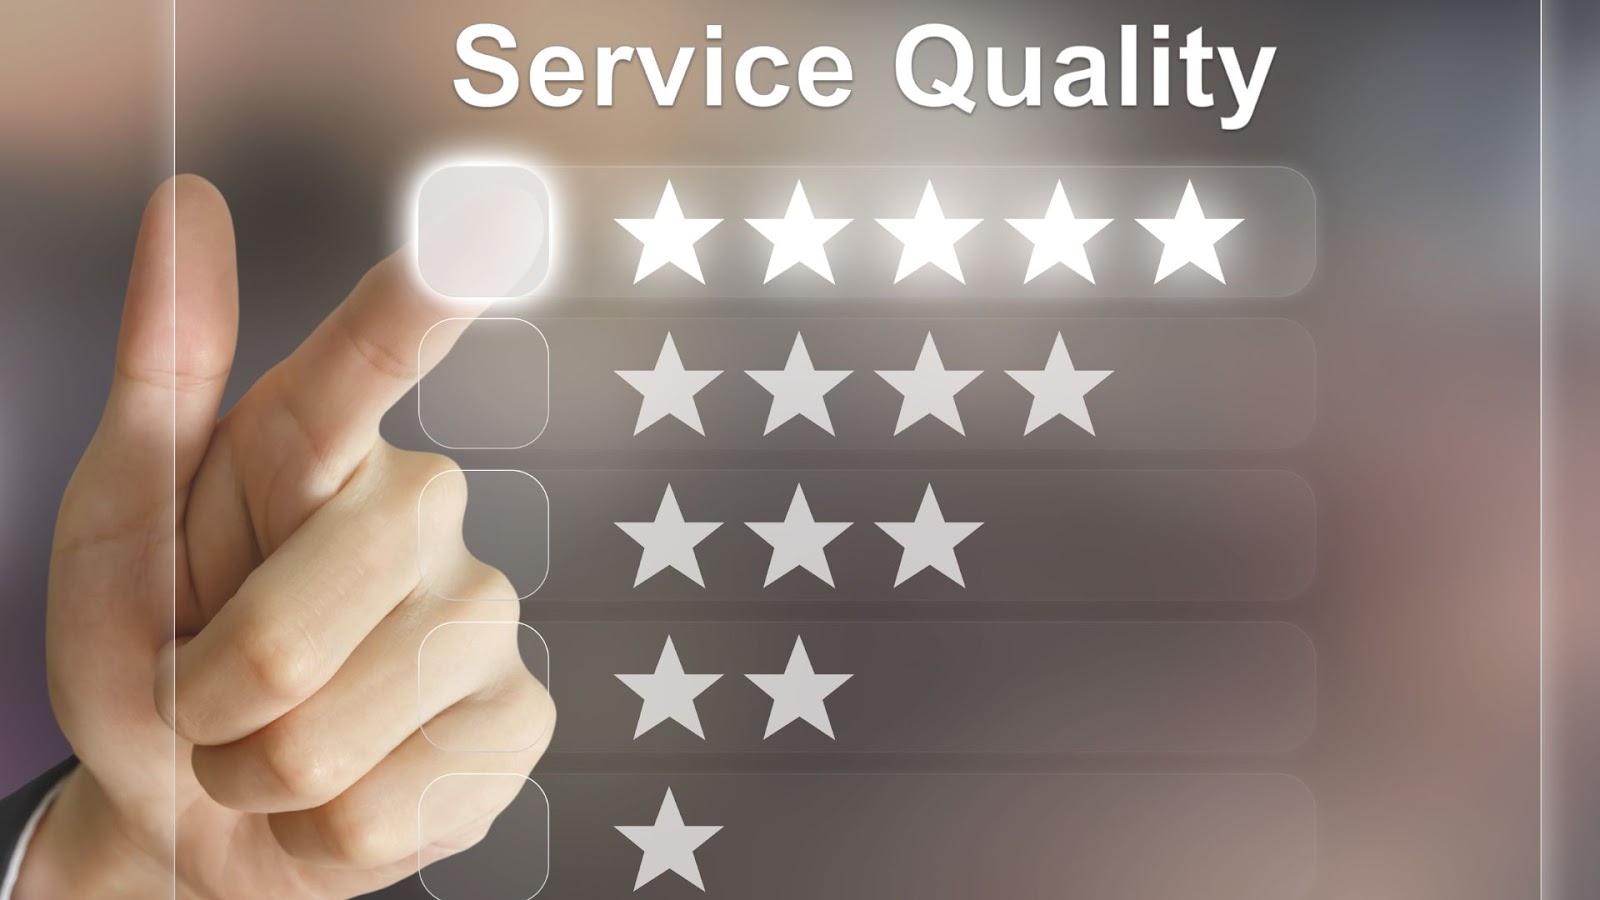 Service quality feedback